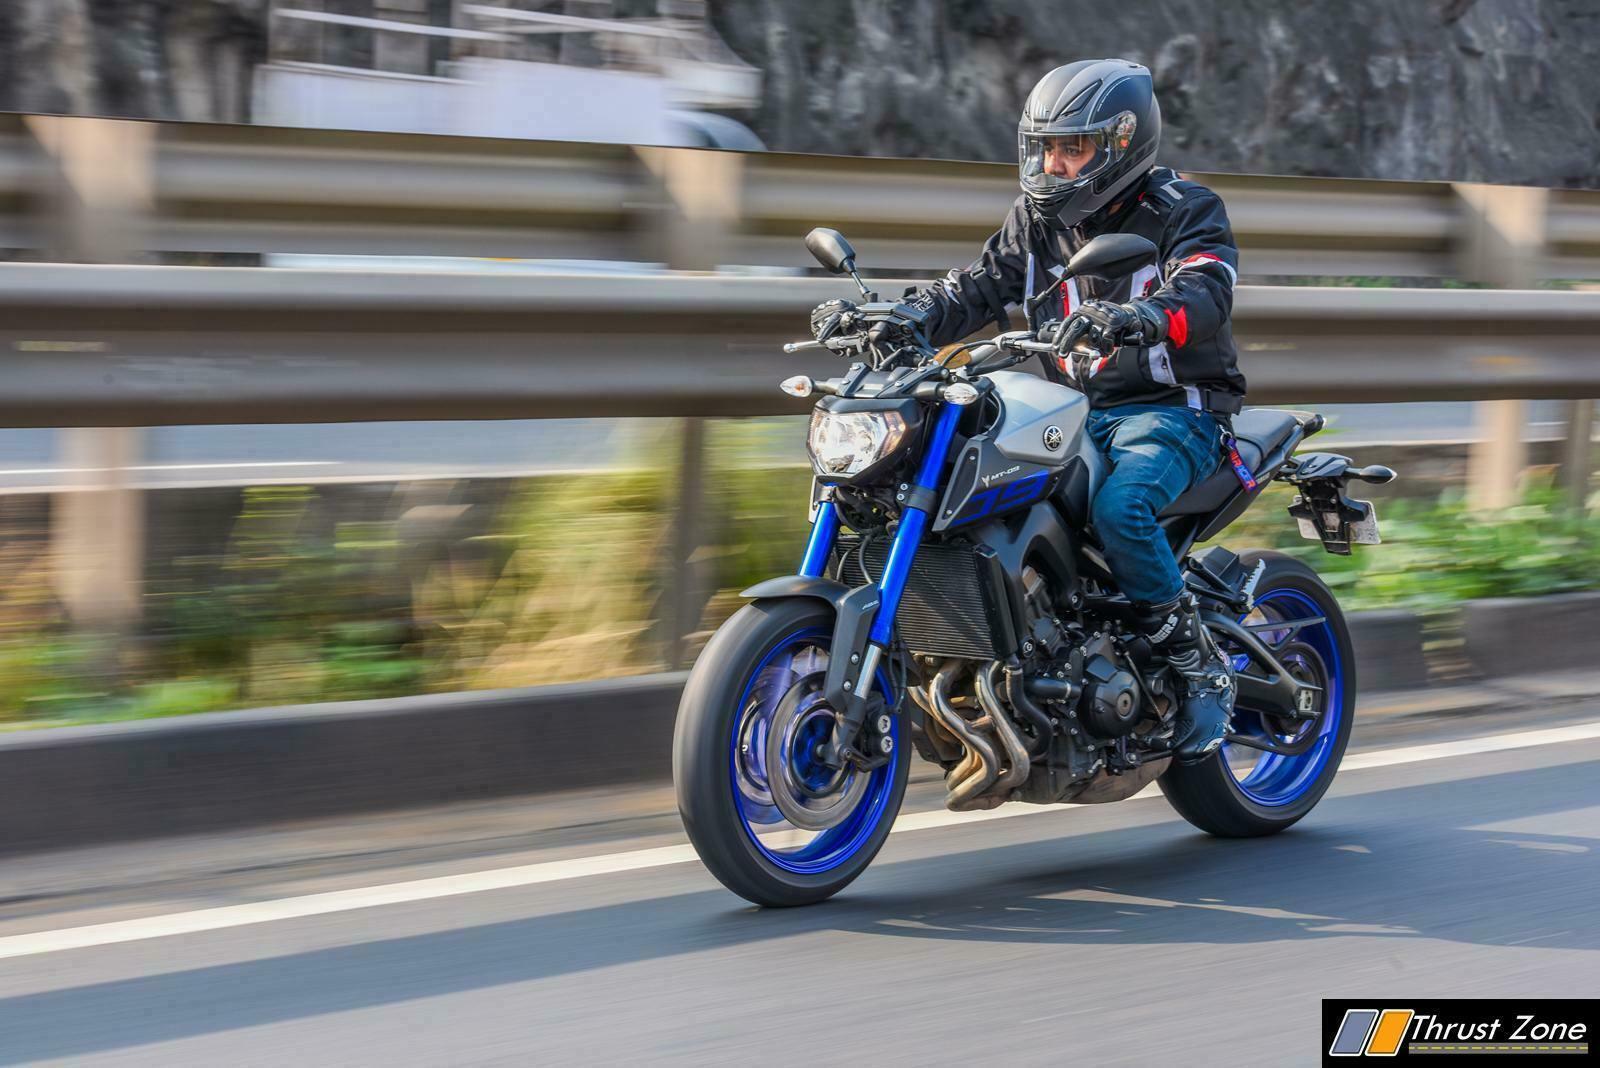 https://www.thrustzone.com/wp-content/uploads/2017/11/Yamaha-MT-09-India-Ride-Review-1.jpg